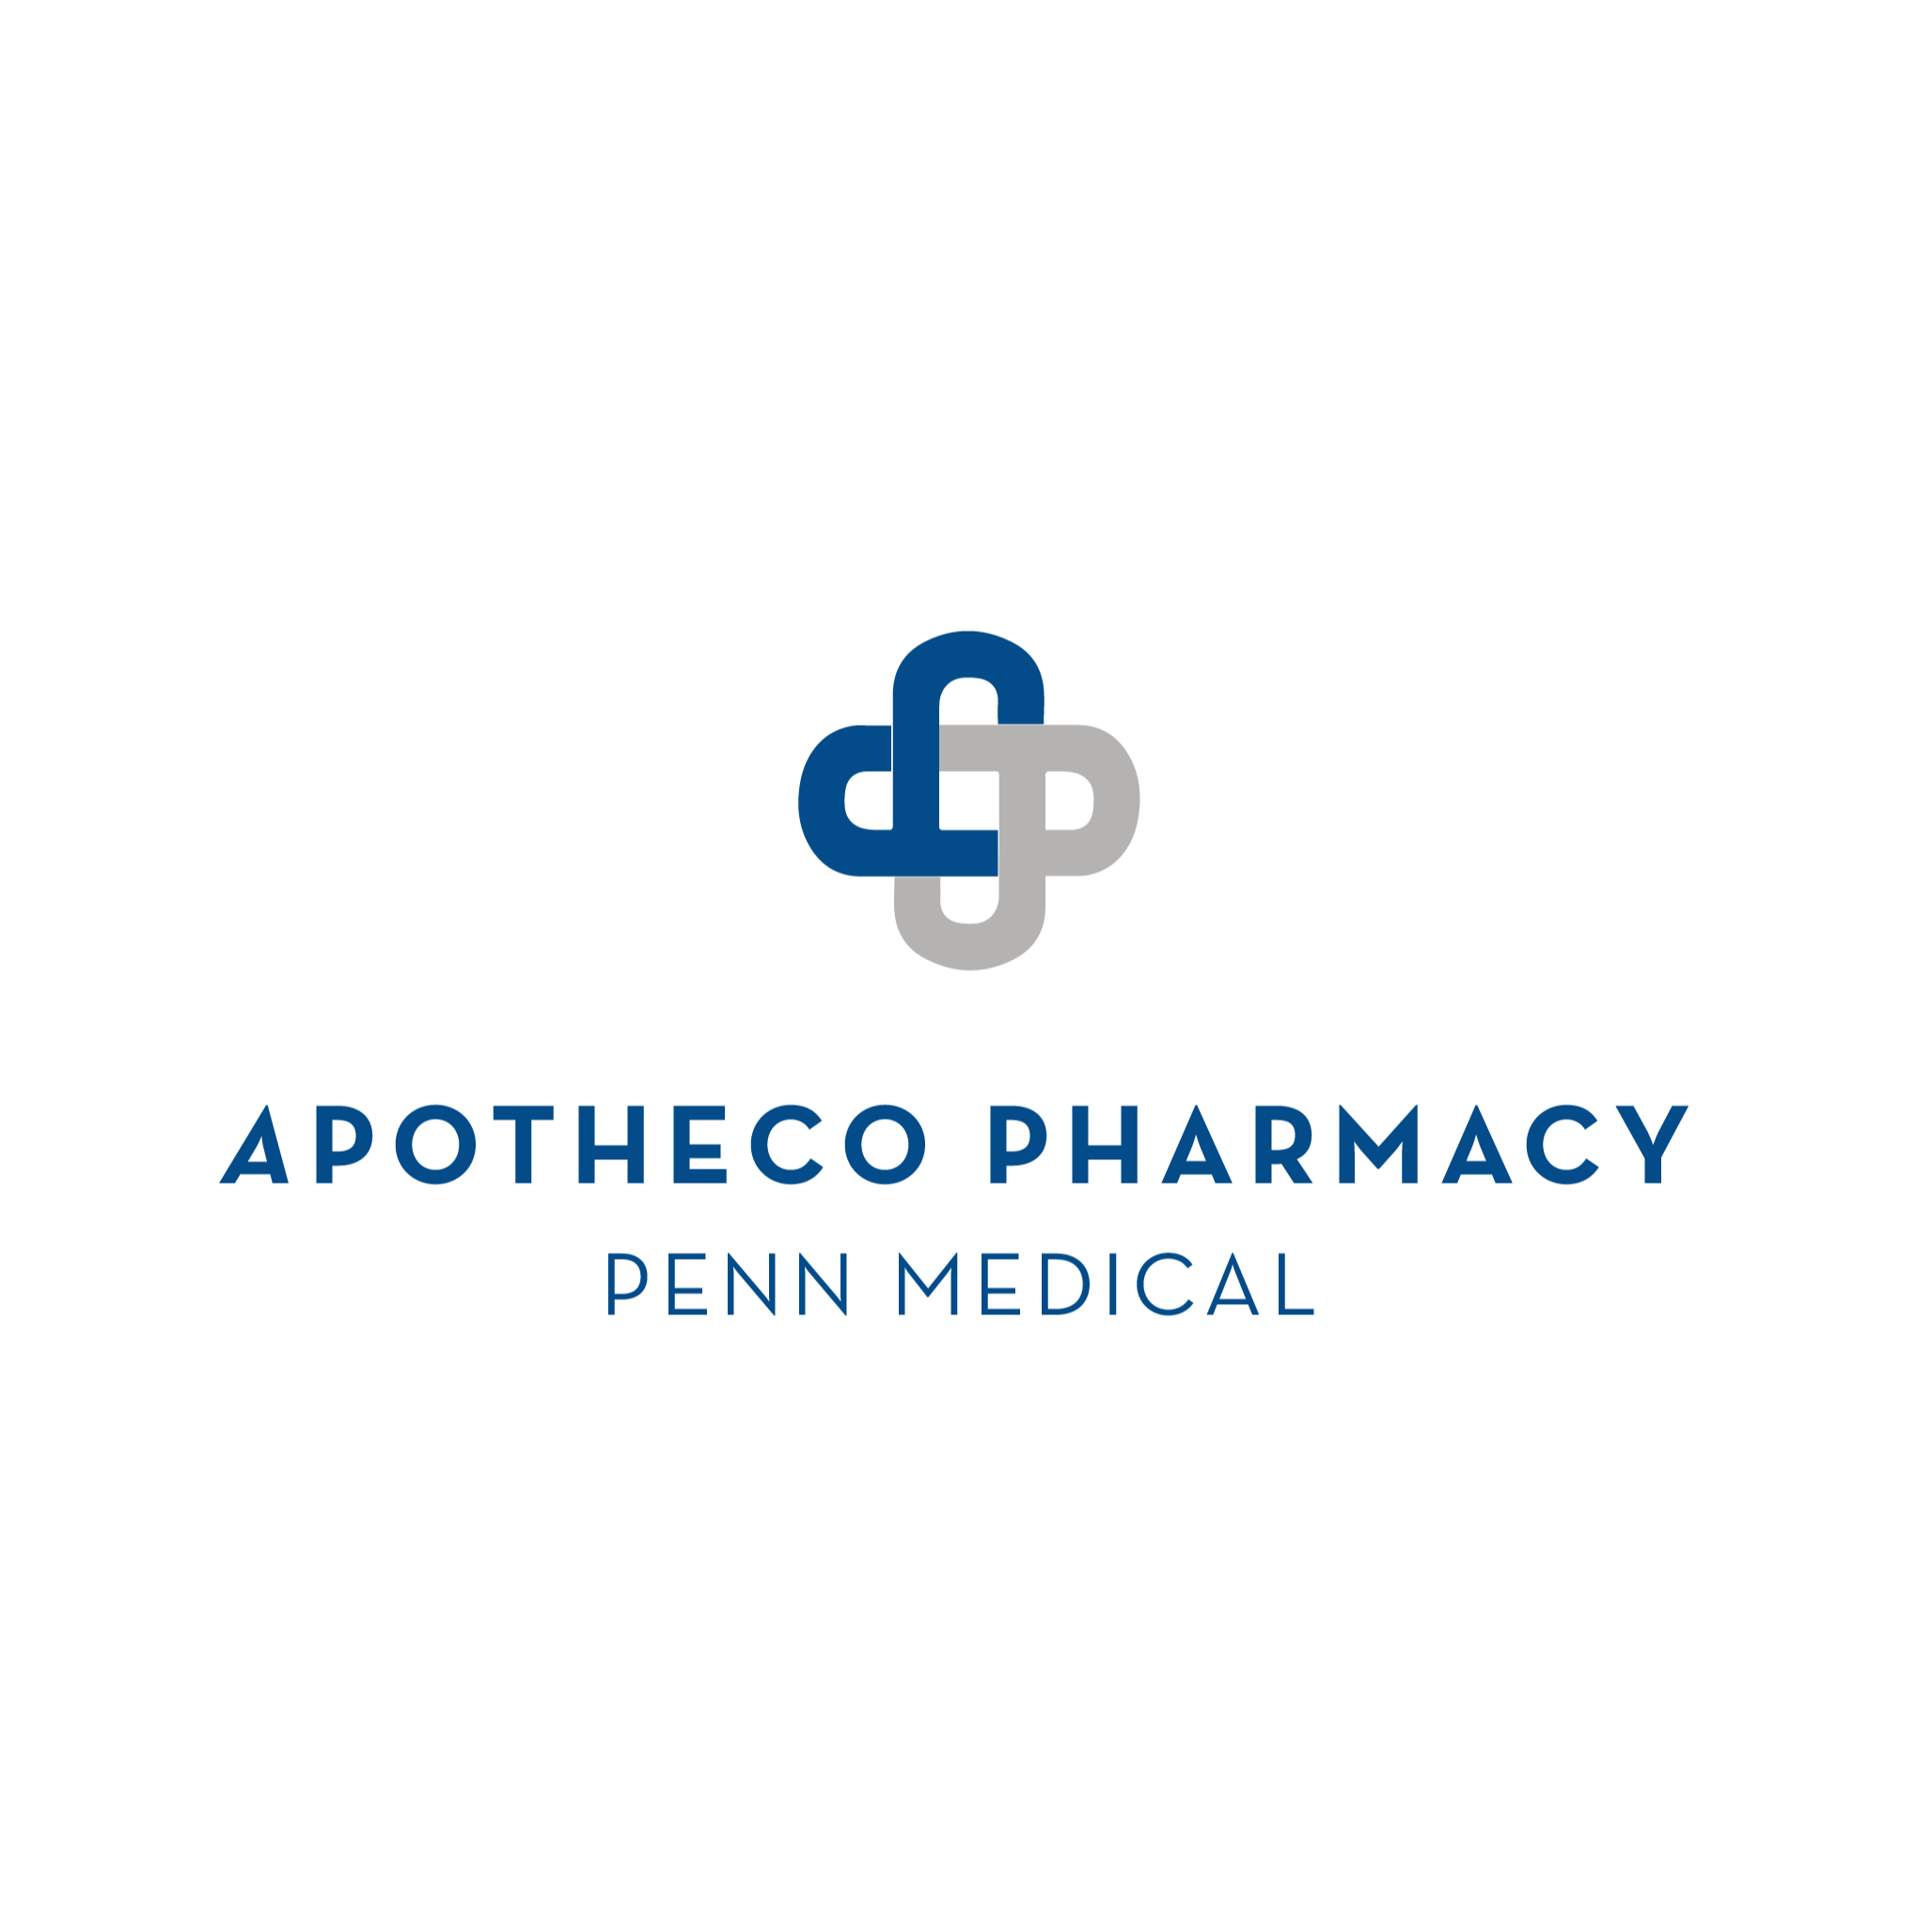 Apotheco Pharmacy Penn Medical - Yardley, PA 19067 - (215)960-9010 | ShowMeLocal.com